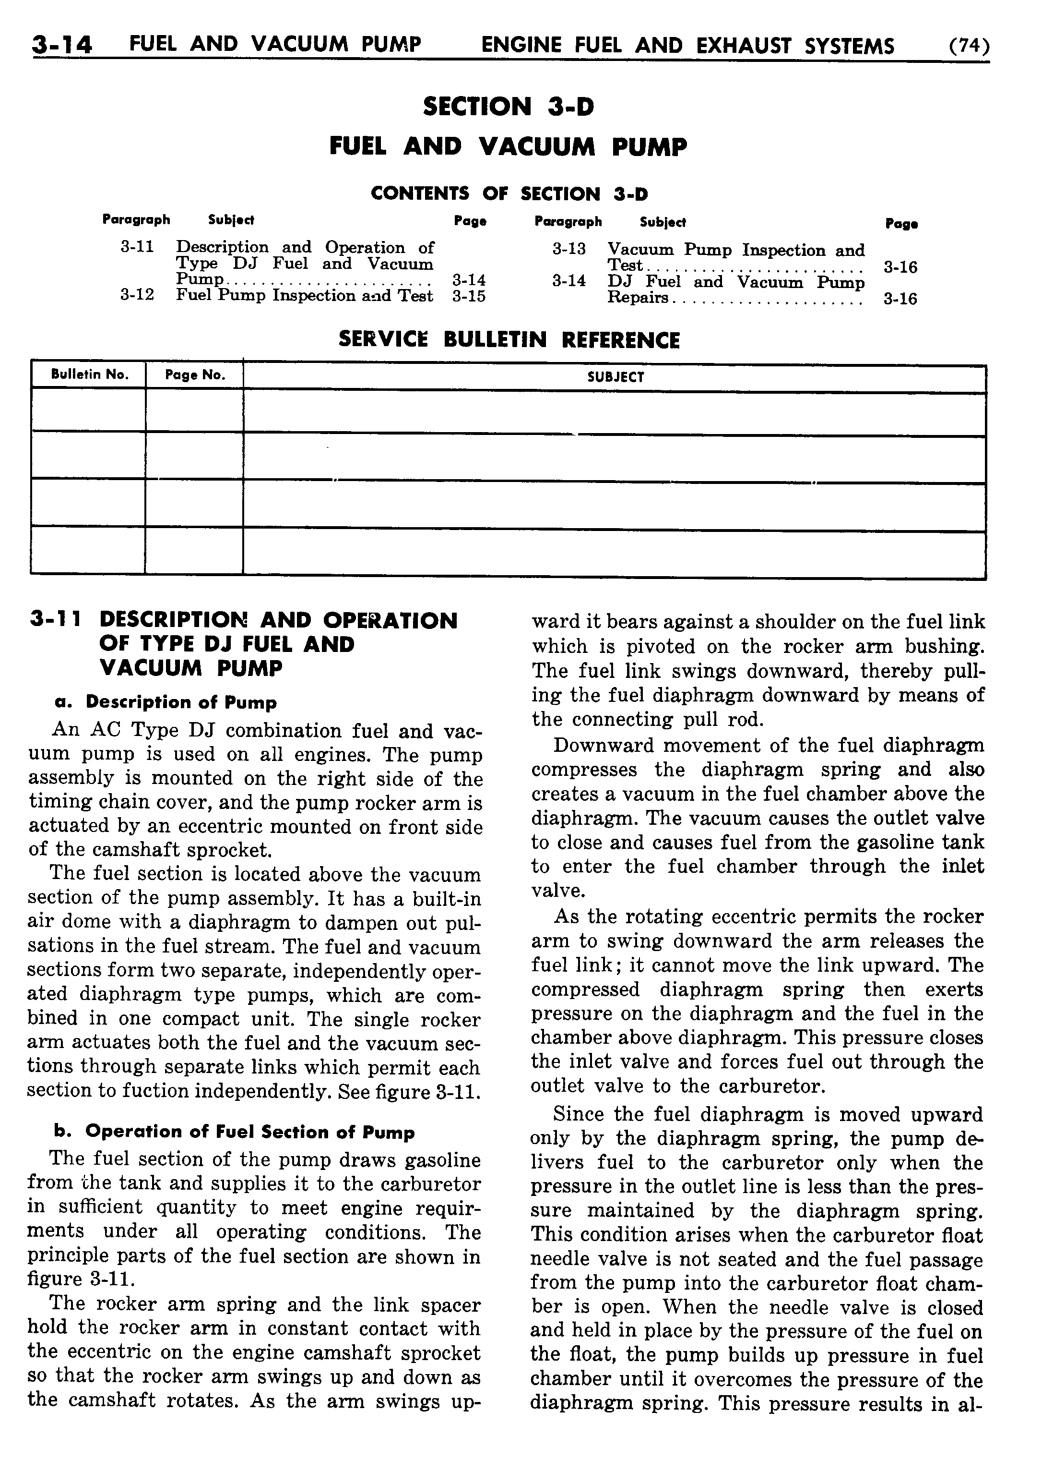 n_04 1955 Buick Shop Manual - Engine Fuel & Exhaust-014-014.jpg